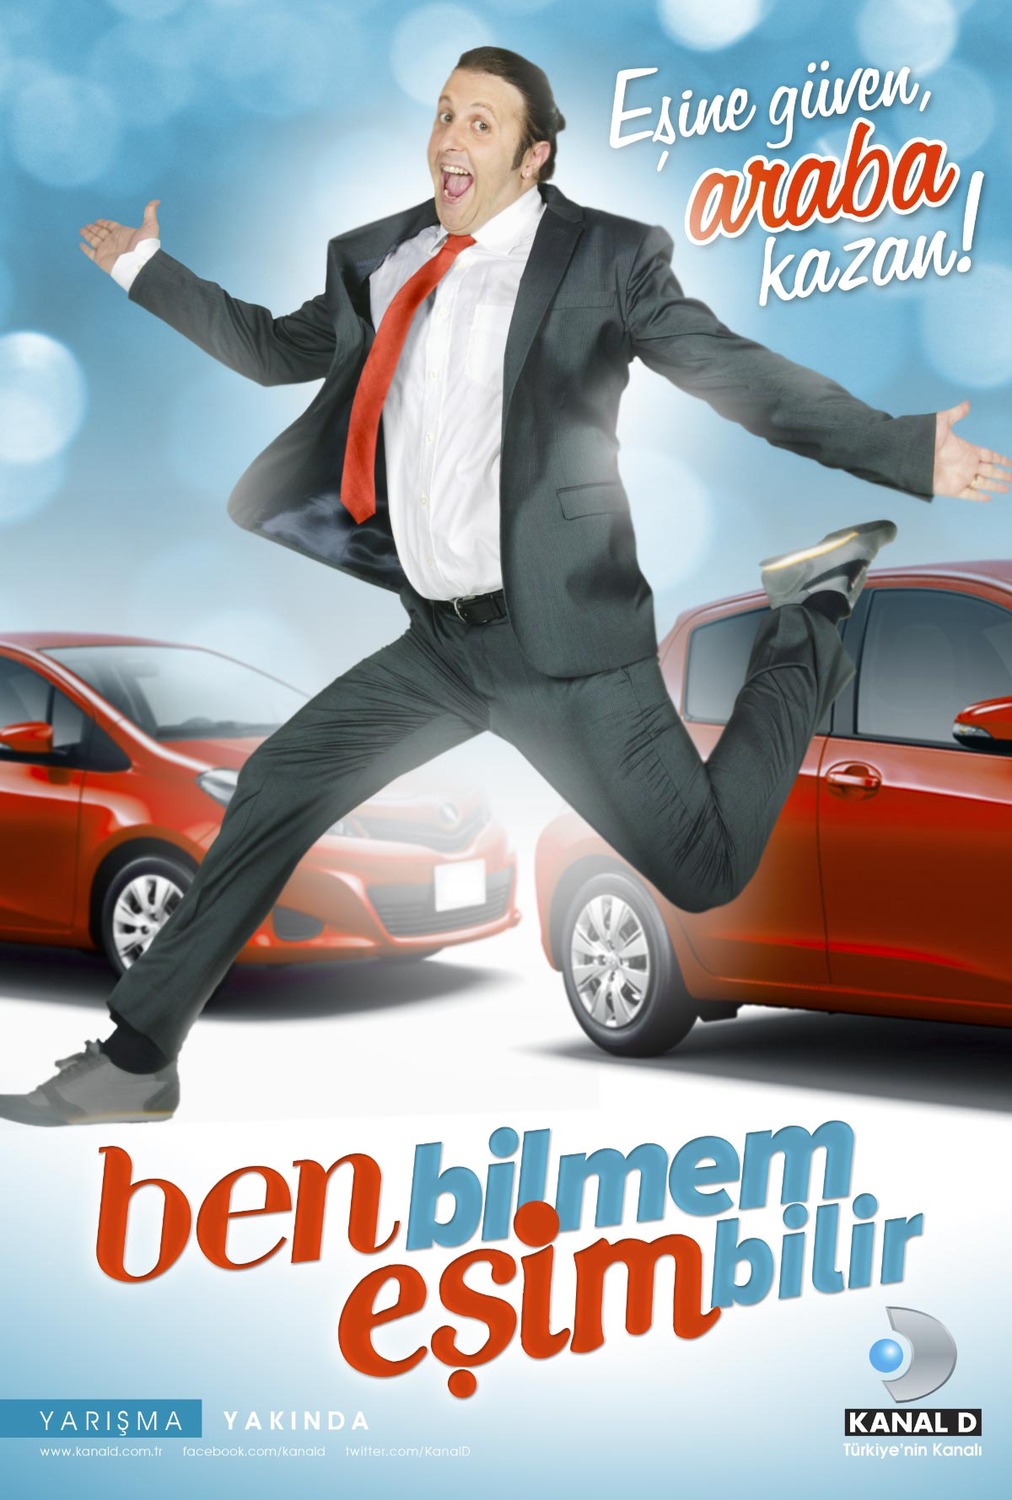 Extra Large TV Poster Image for Ben bilmem esim bilir (#3 of 4)